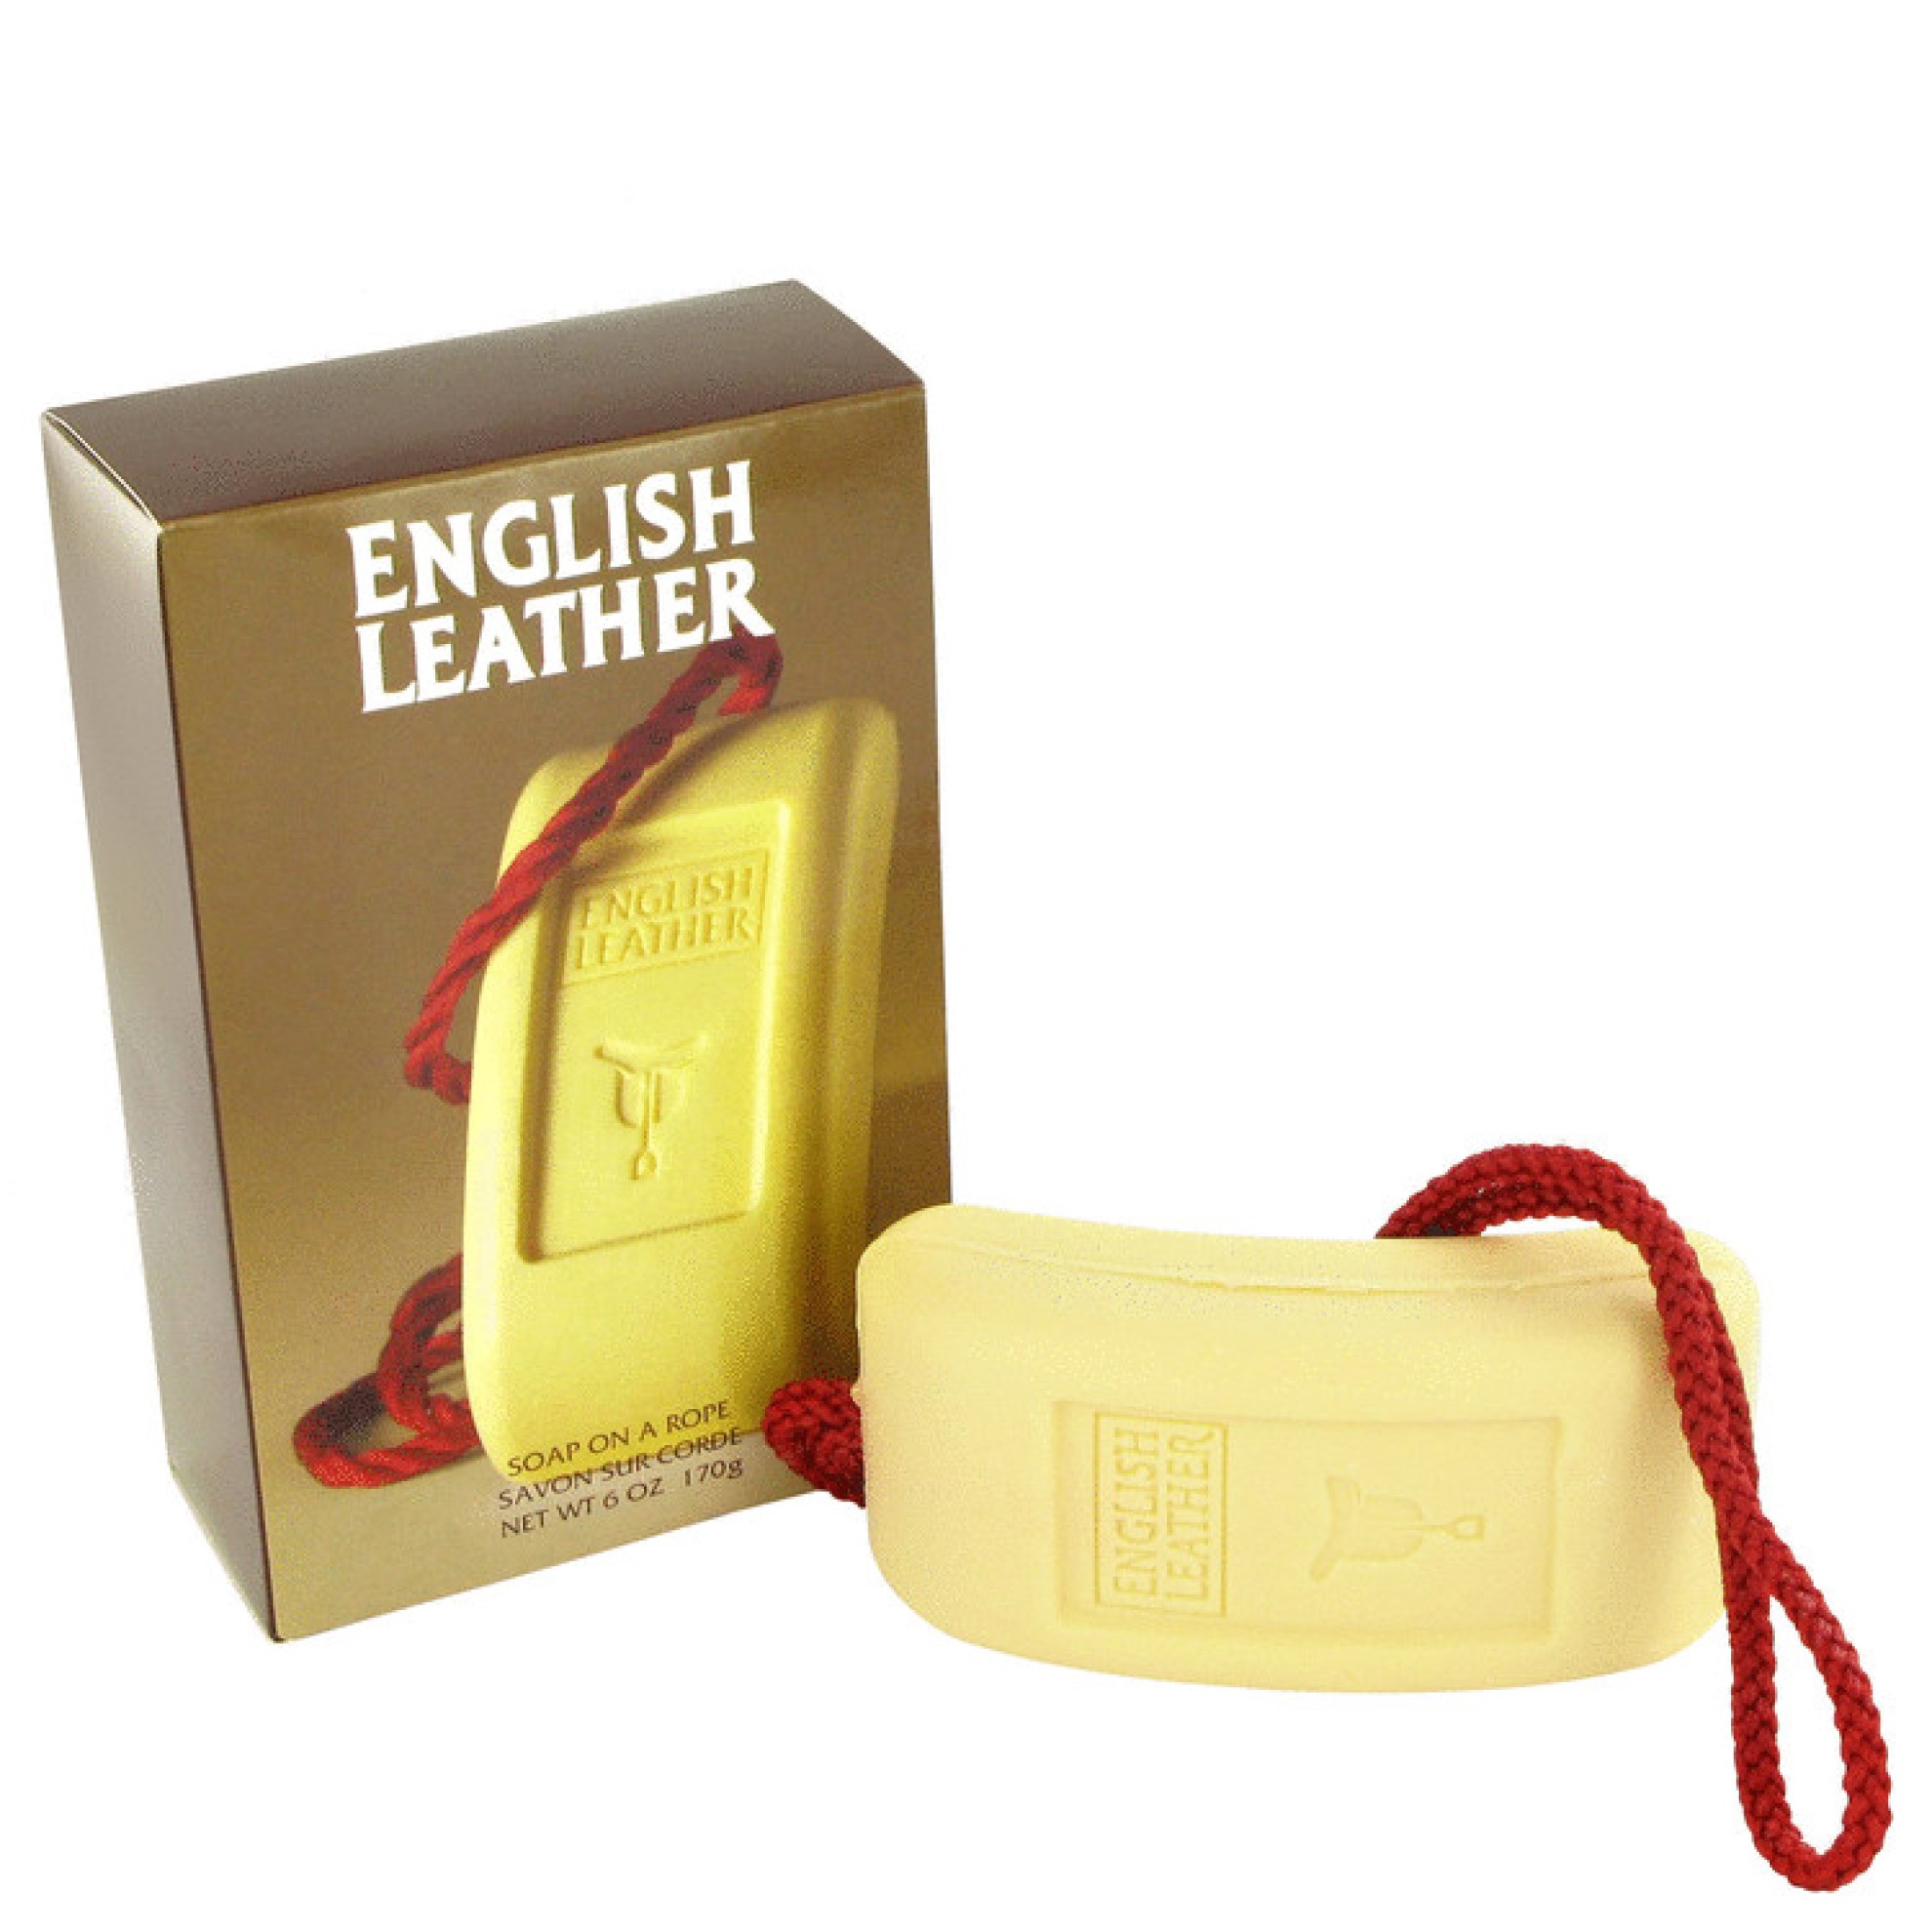 Image of Dana ENGLISH LEATHER Soap on a rope 6 oz von XXL-Parfum.ch